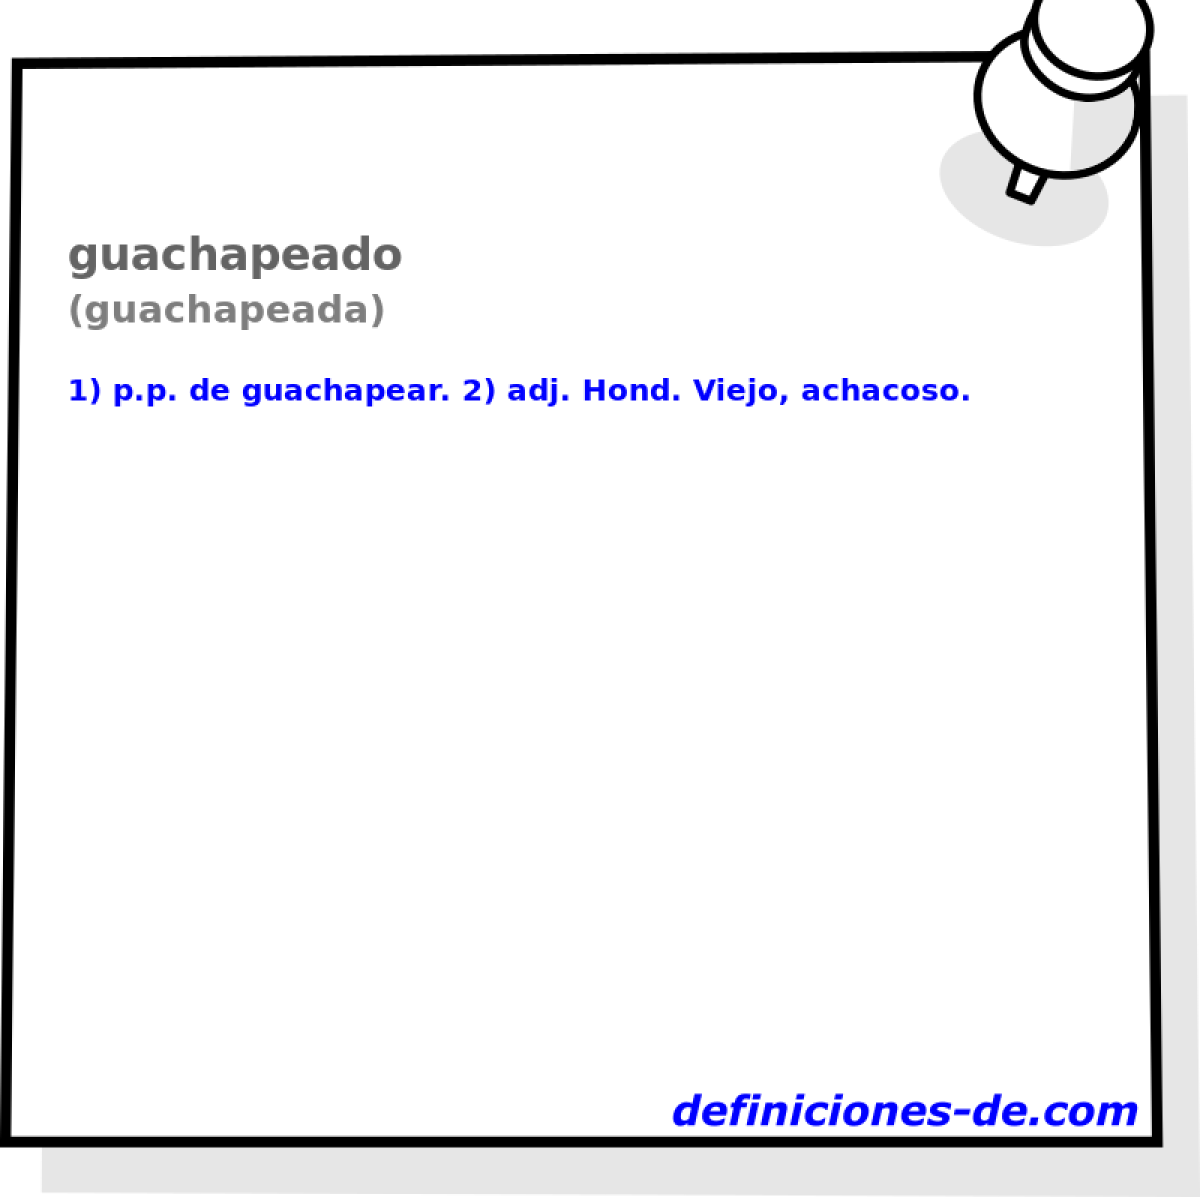 guachapeado (guachapeada)